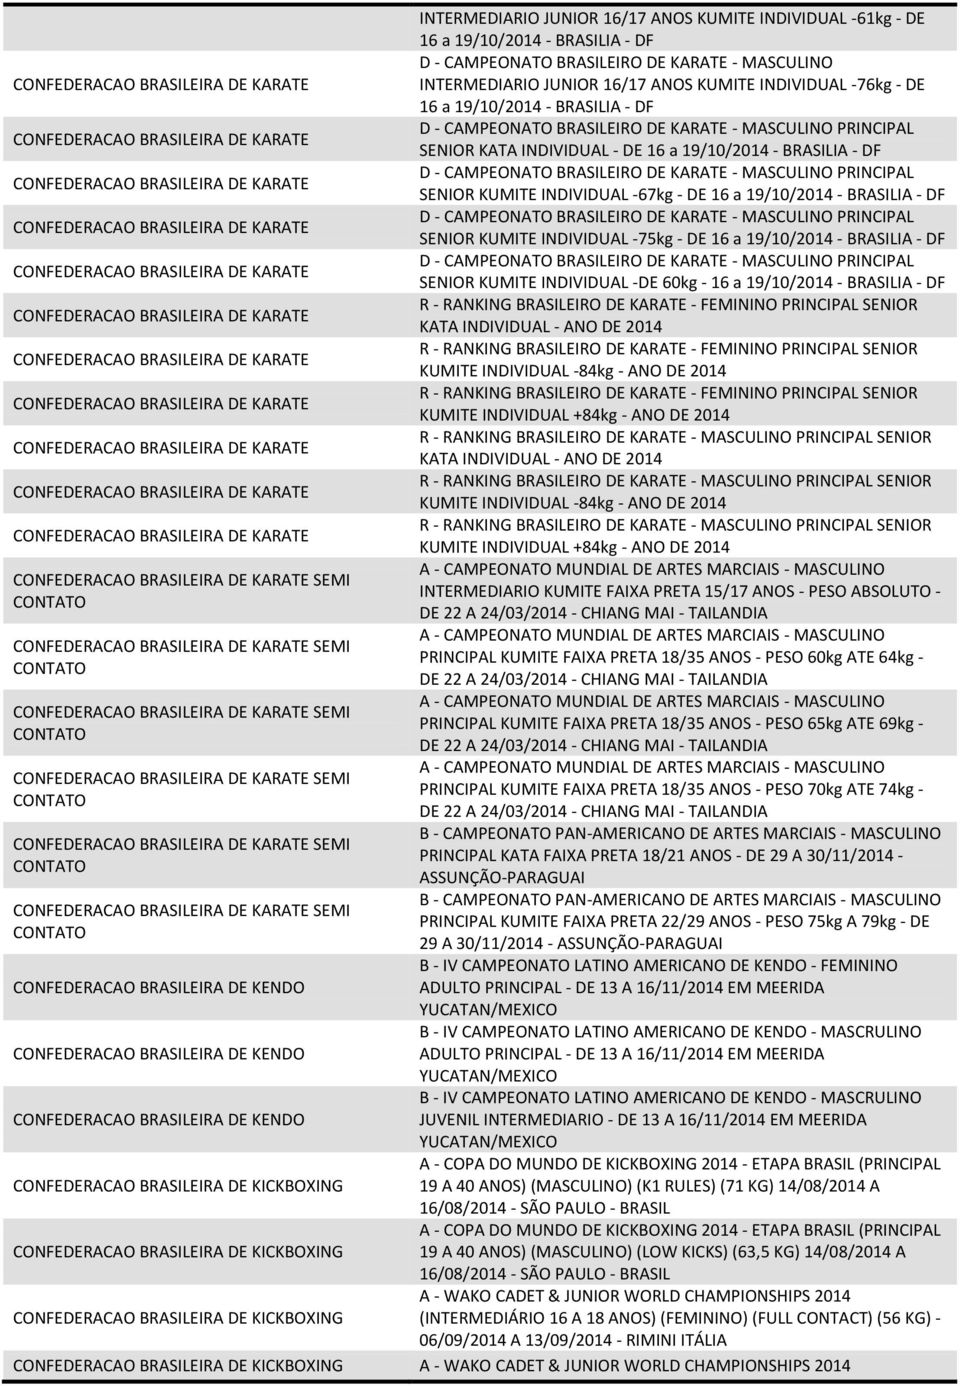 -67kg - DE 16 a 19/10/2014 - D - CAMPEONATO BRASILEIRO DE KARATE - MASCULINO PRINCIPAL SENIOR KUMITE INDIVIDUAL -75kg - DE 16 a 19/10/2014 - D - CAMPEONATO BRASILEIRO DE KARATE - MASCULINO PRINCIPAL